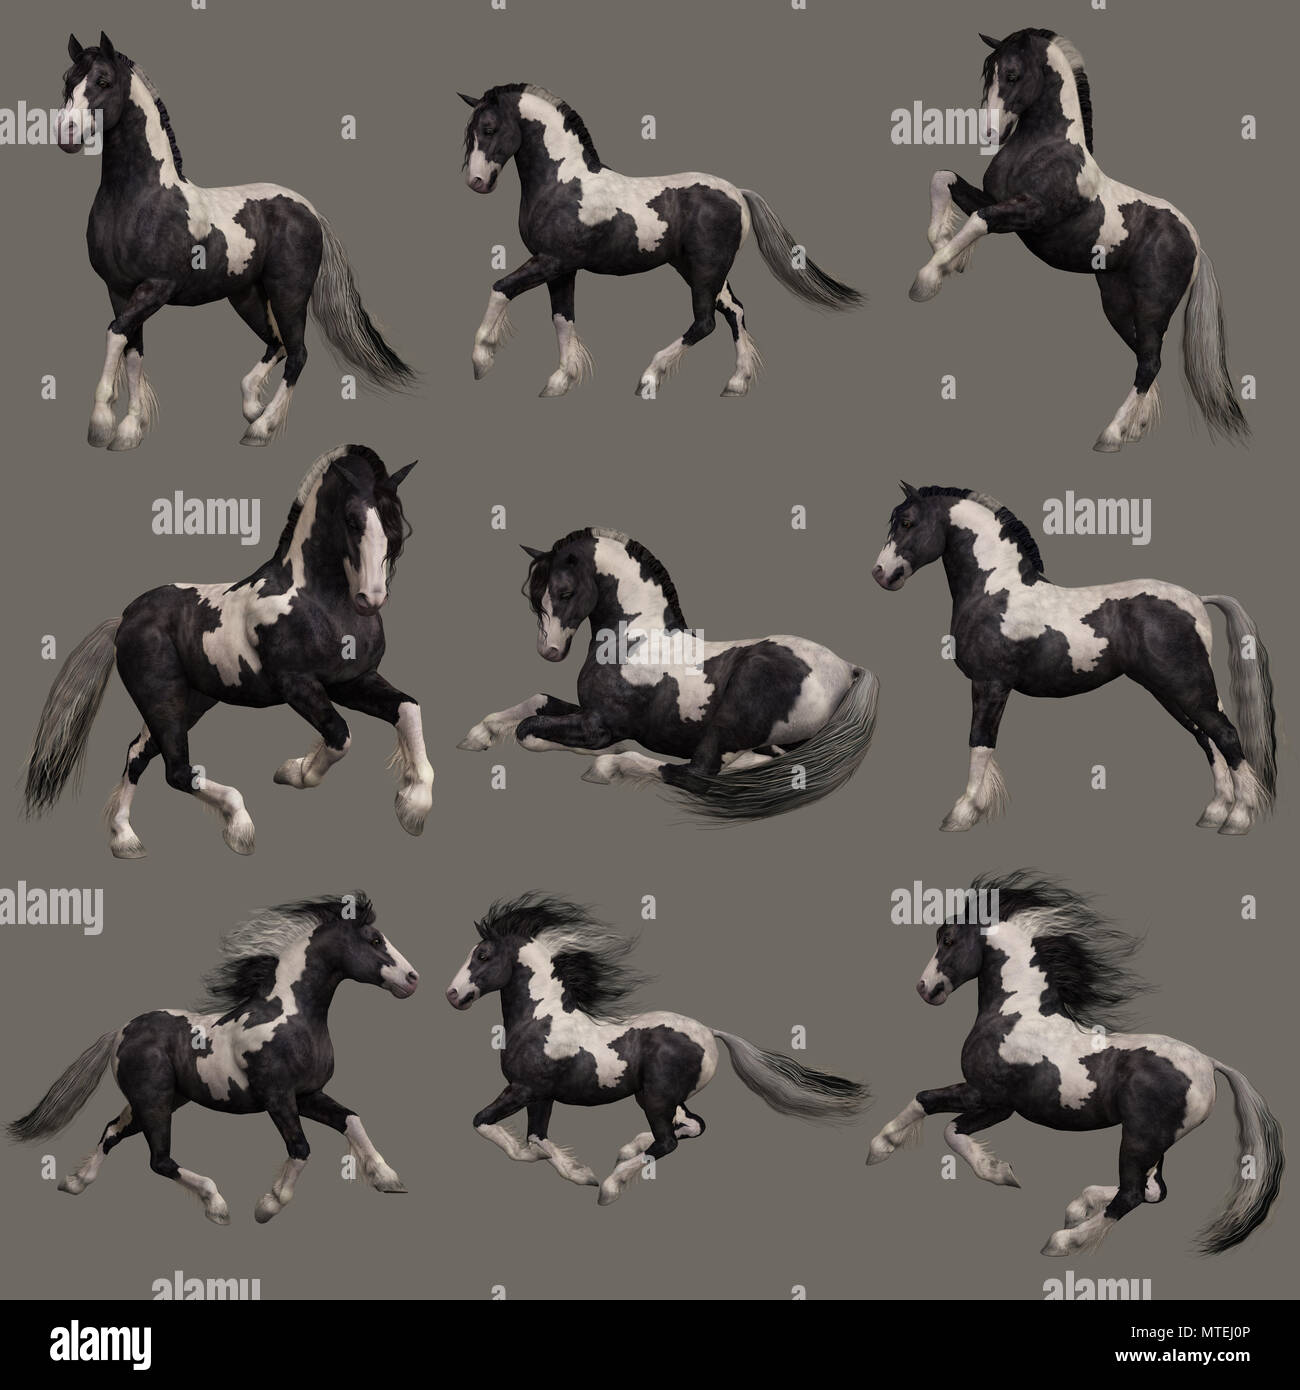 ArtStation - 11 horse poses